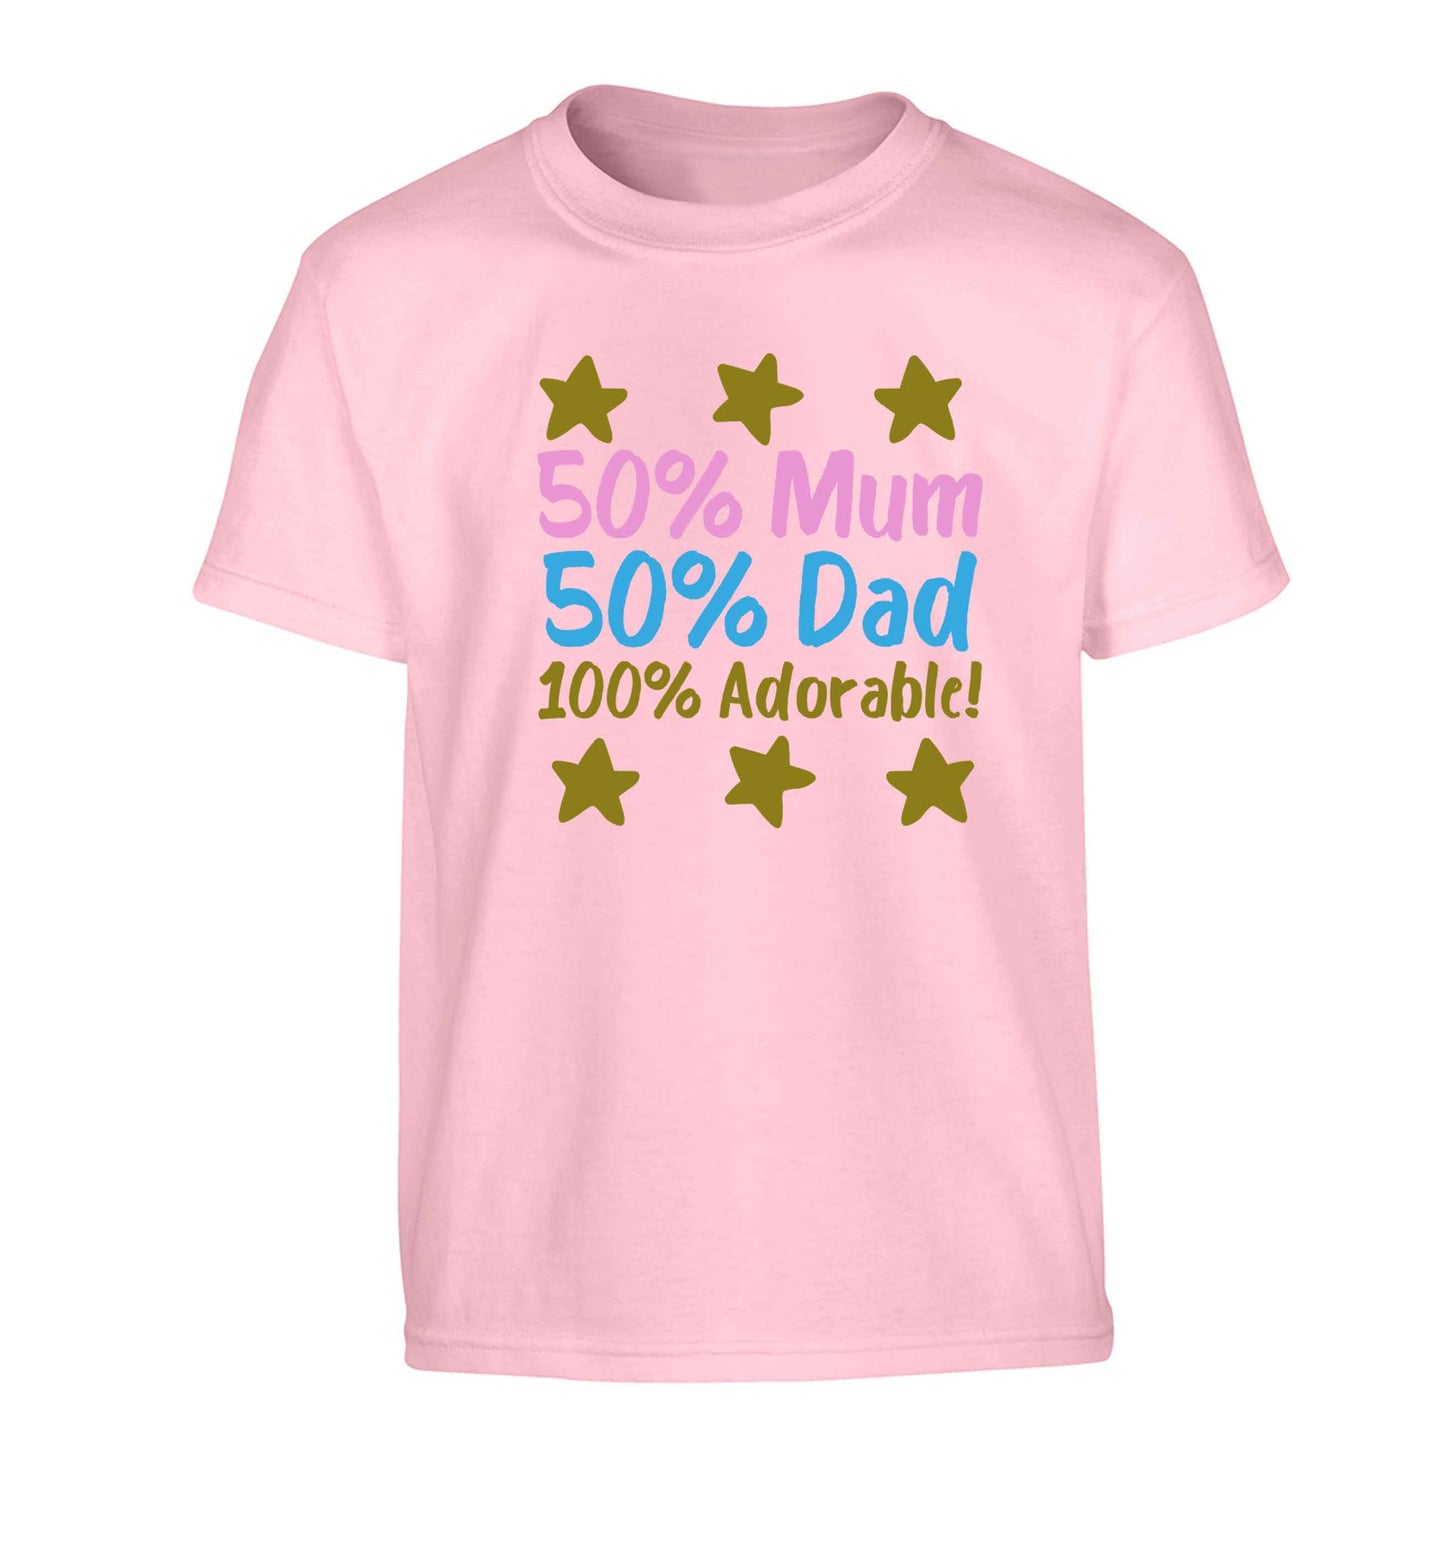 50% mum 50% dad 100% adorable Children's light pink Tshirt 12-13 Years